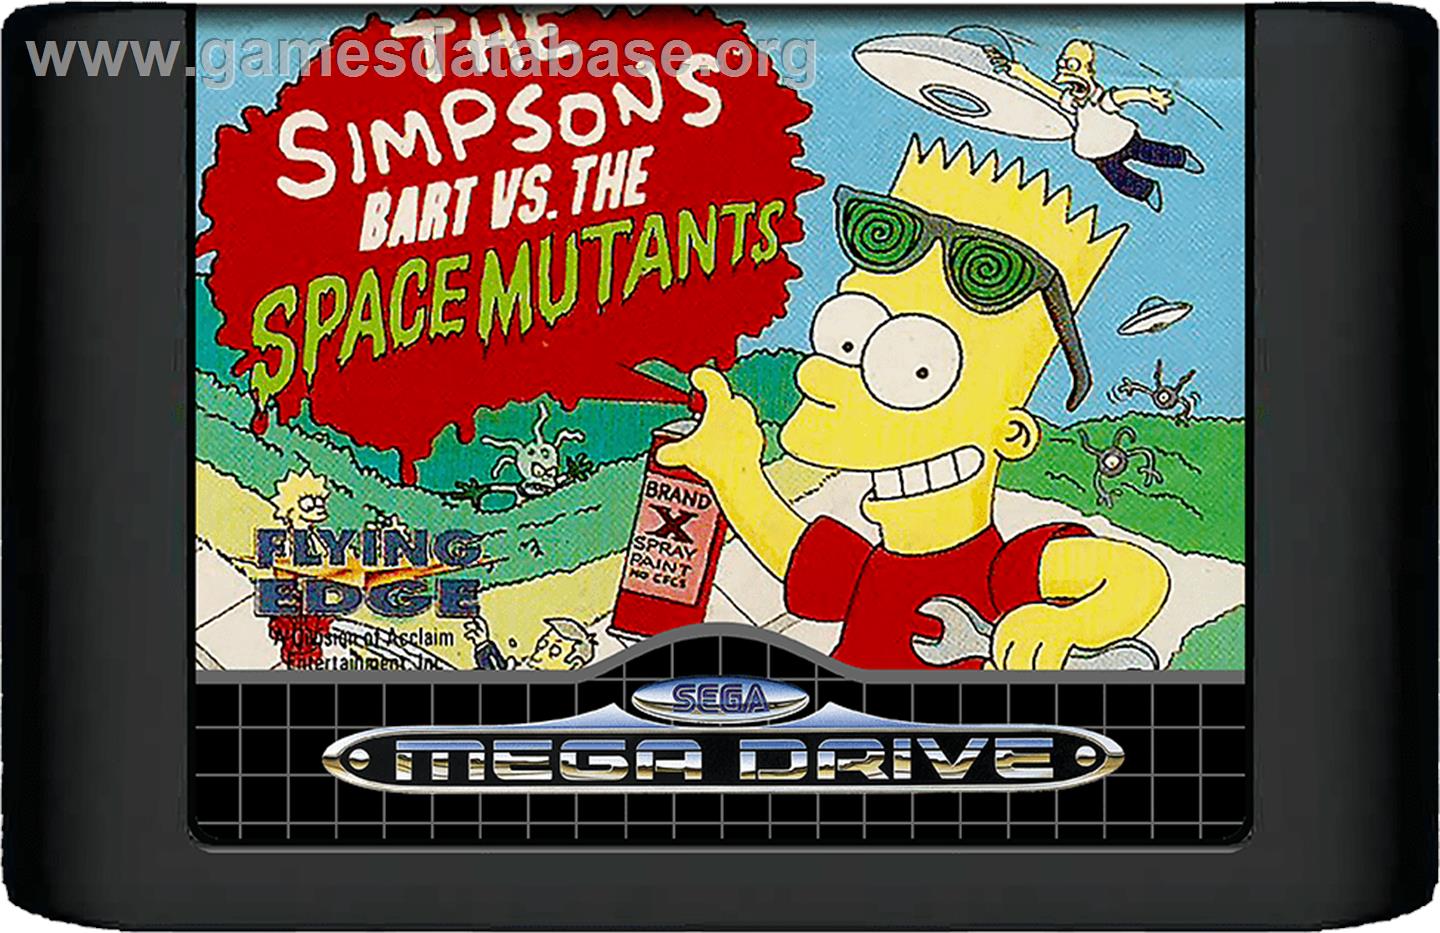 Simpsons, The: Bart vs. the Space Mutants - Sega Genesis - Artwork - Cartridge